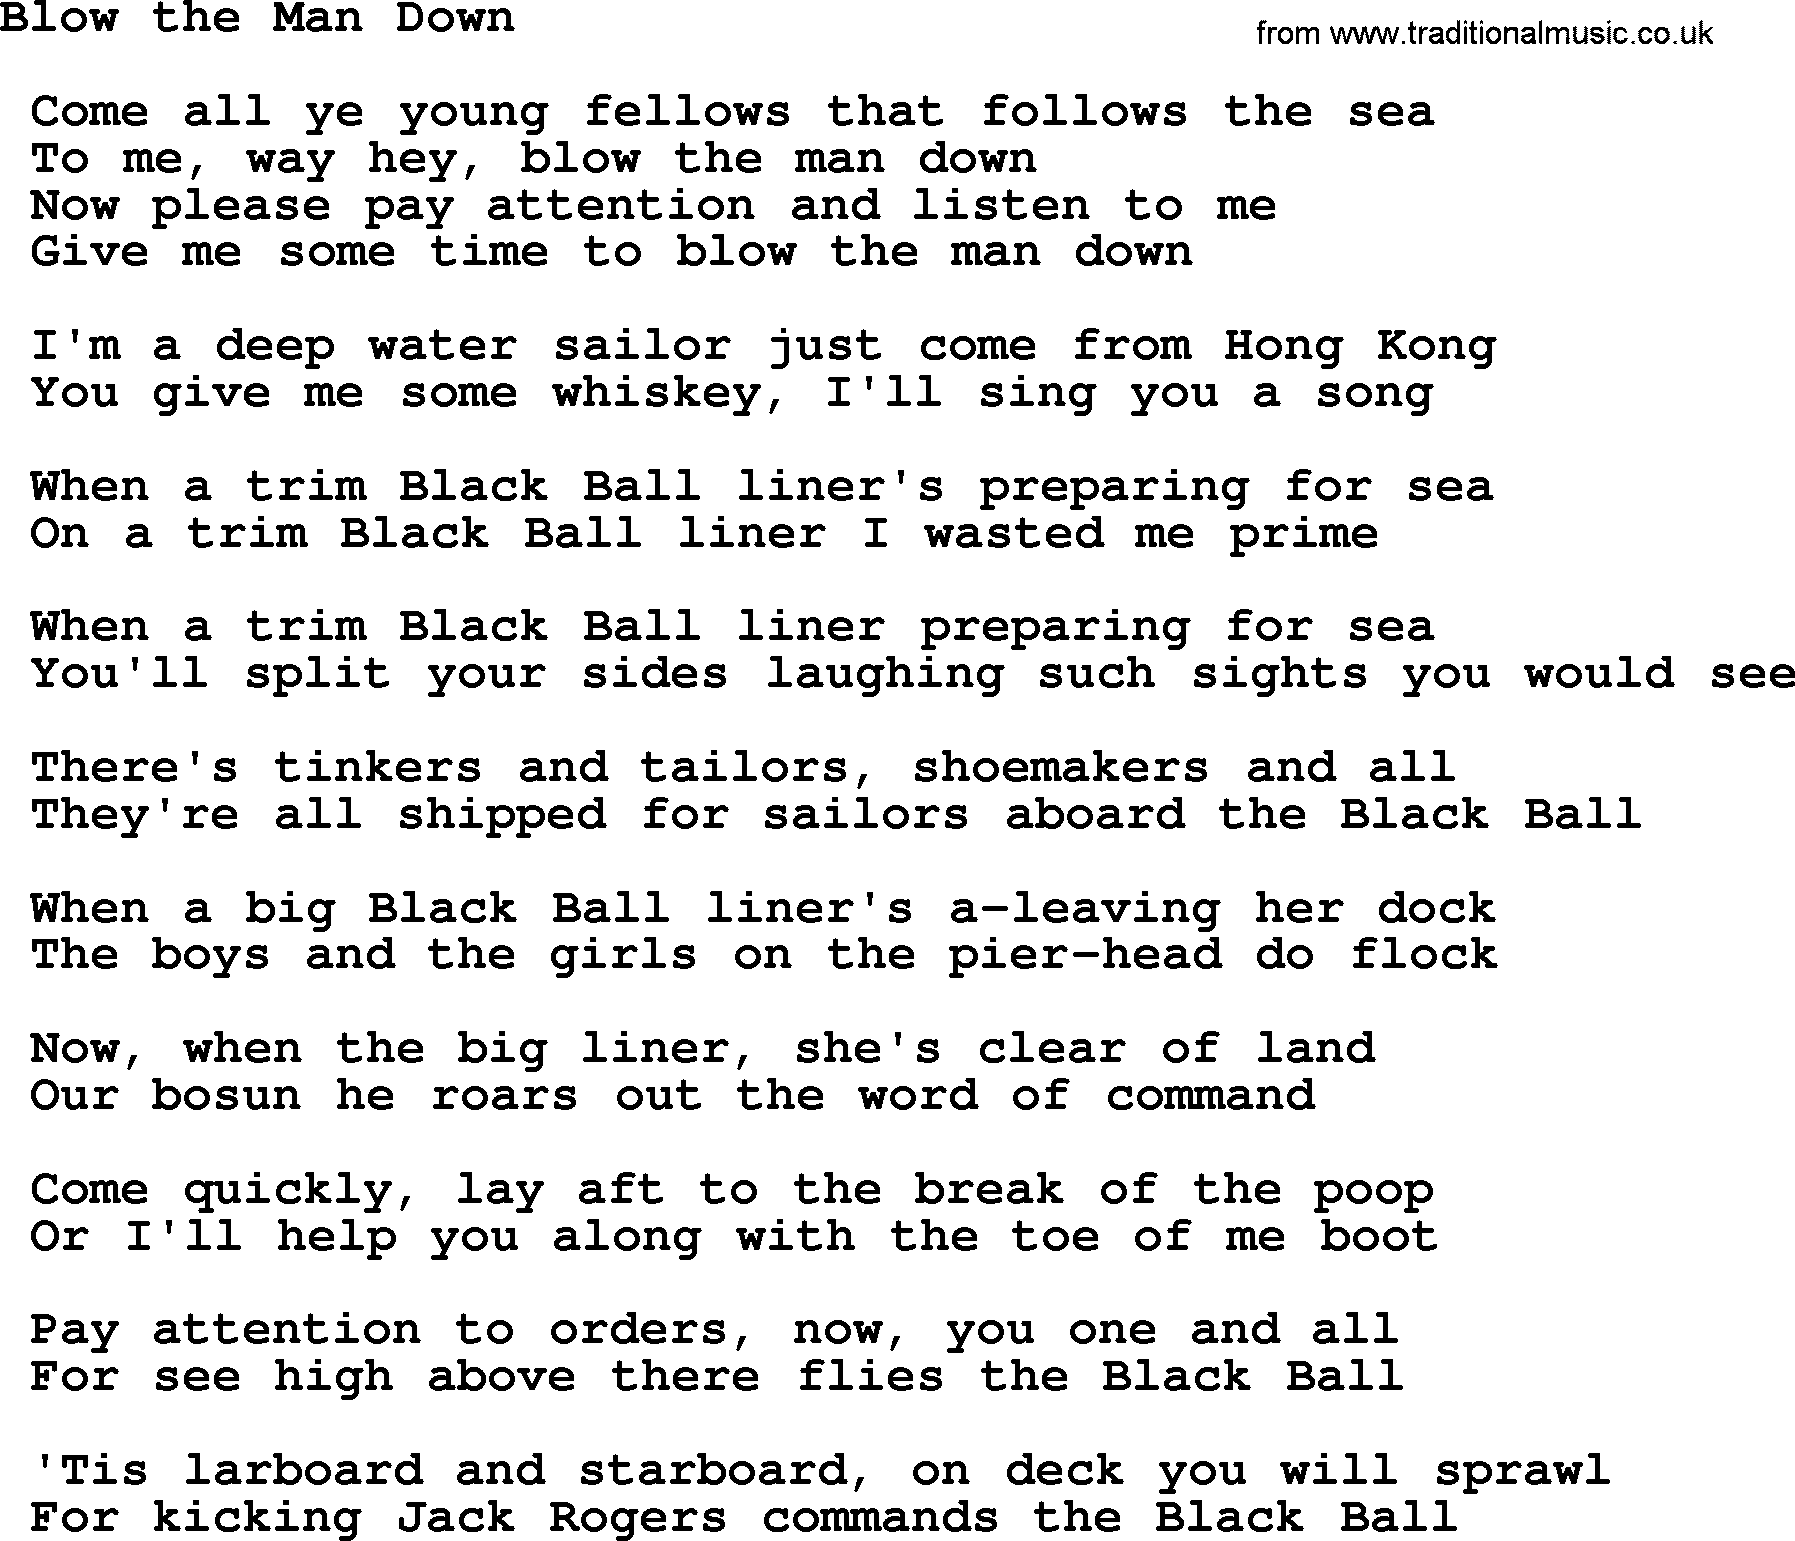 Sea Song or Shantie: Blow The Man Down, lyrics